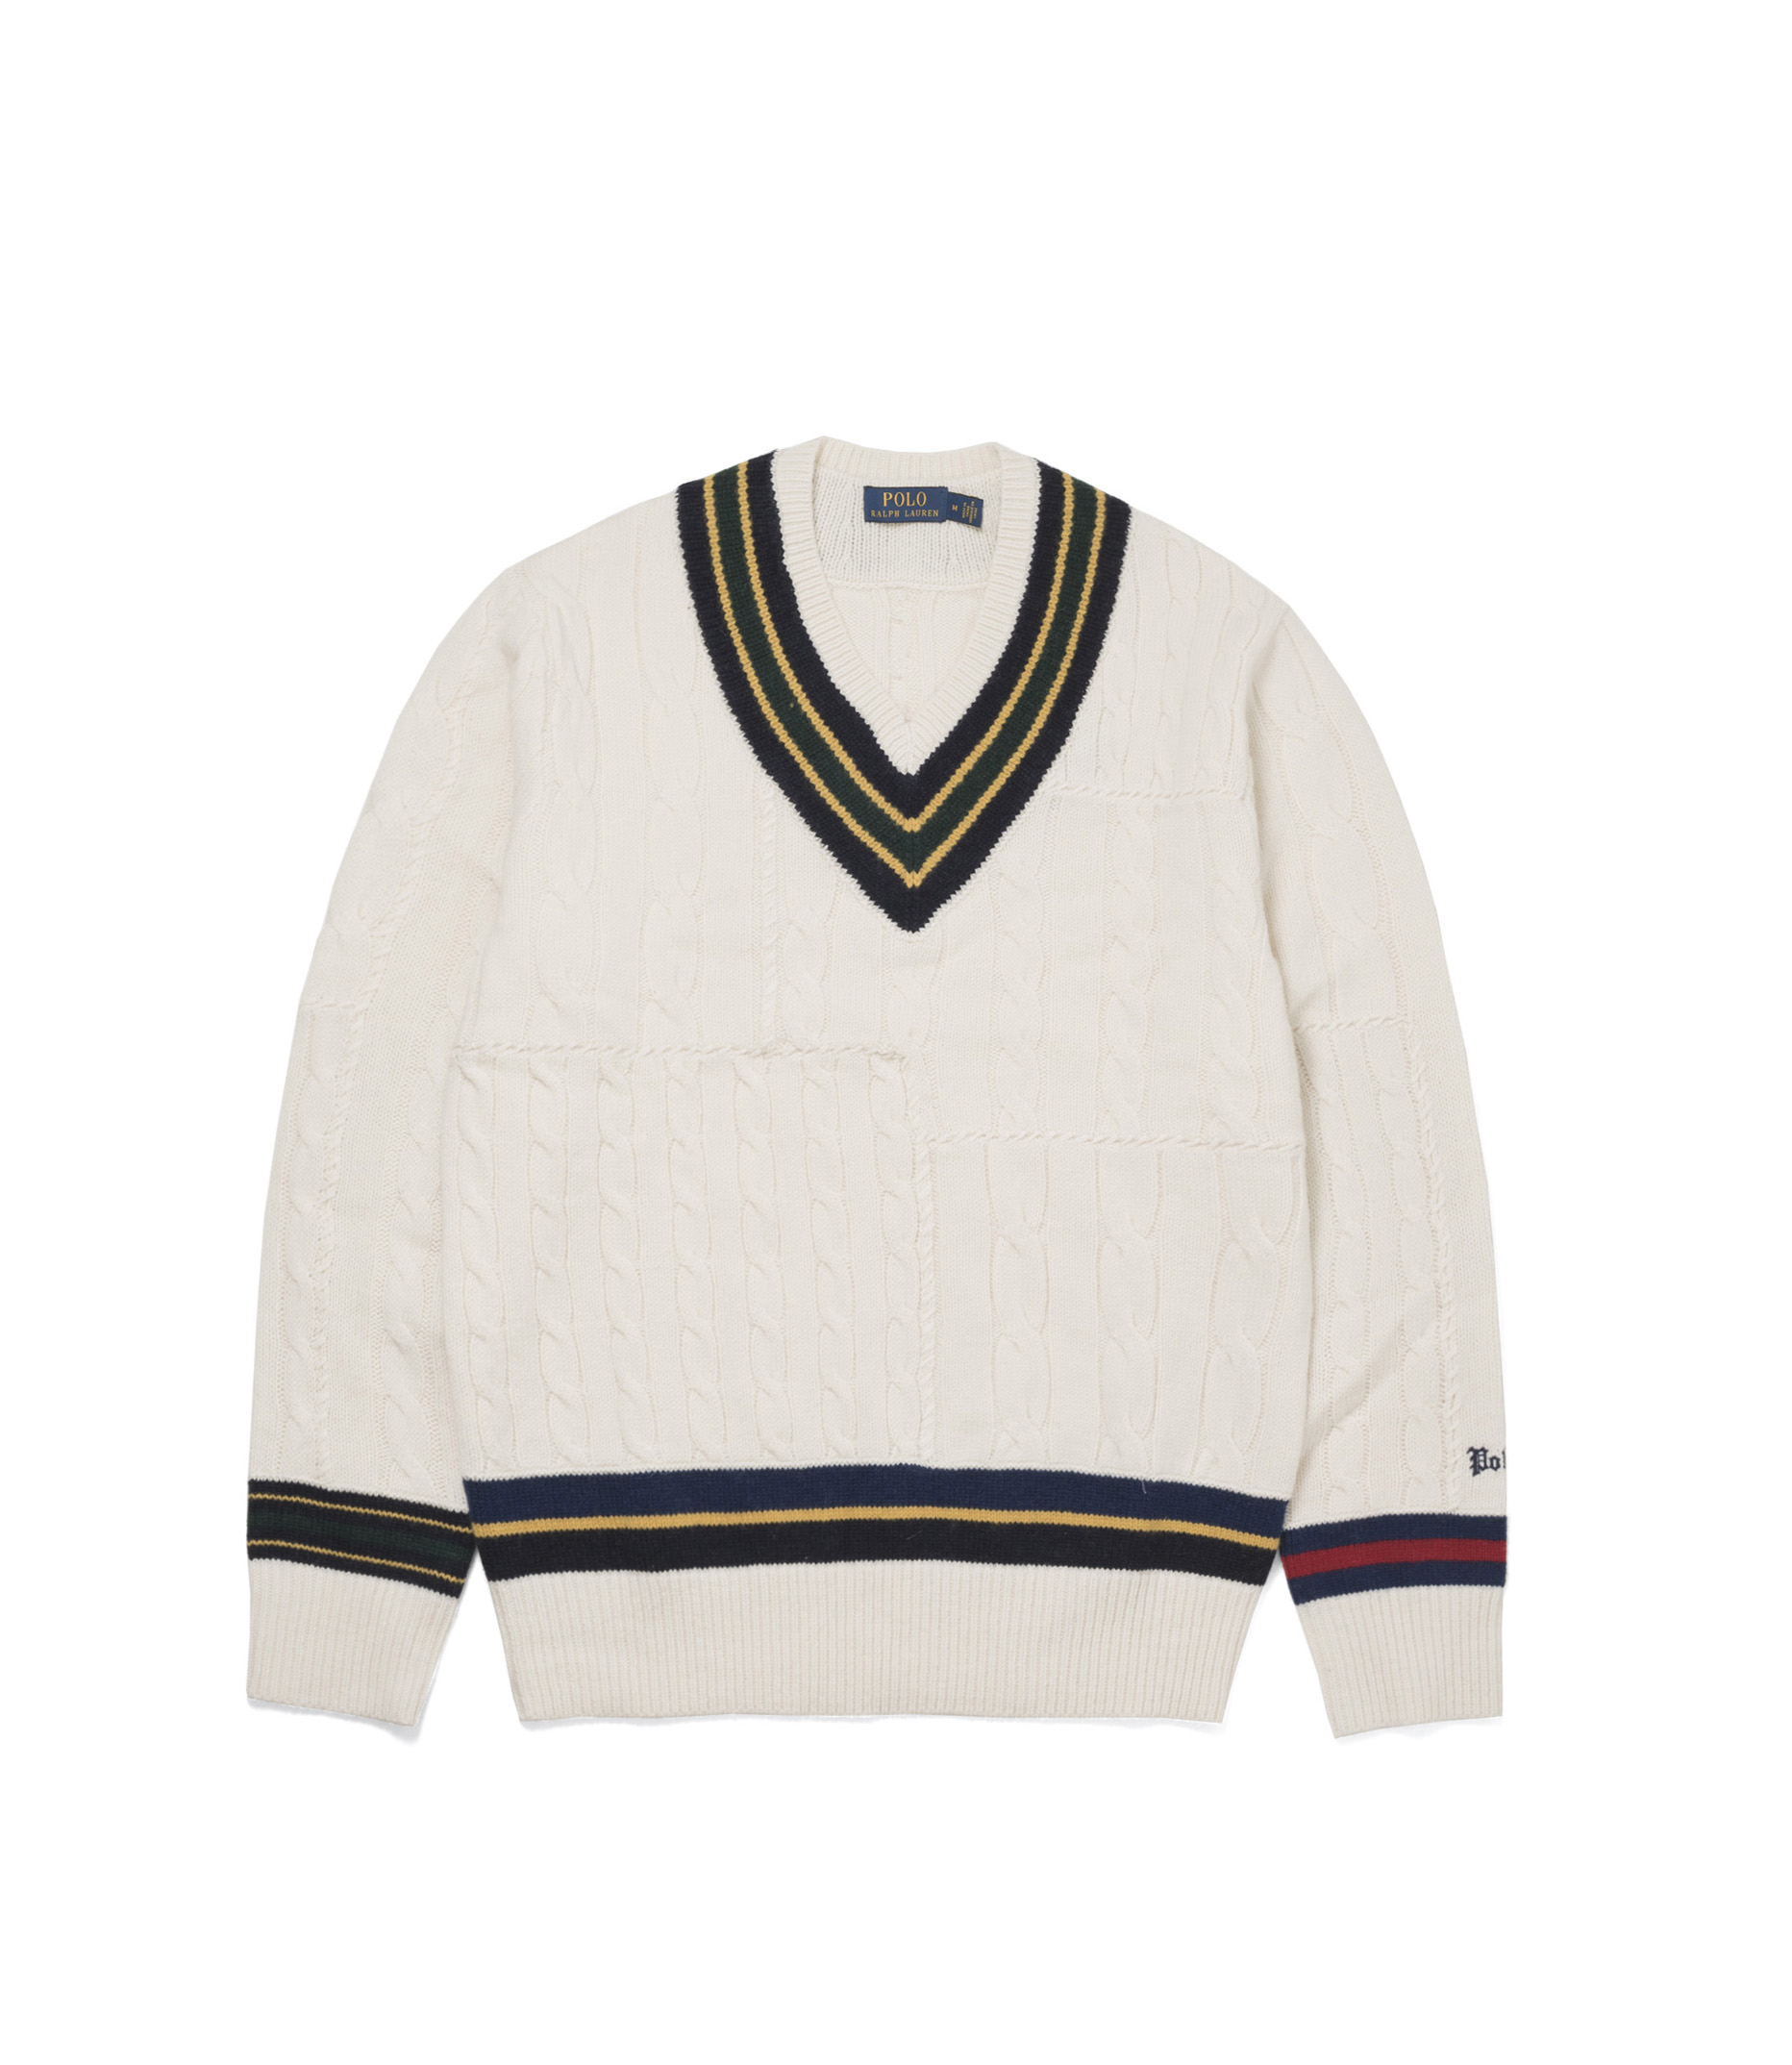 iconic cricket sweater